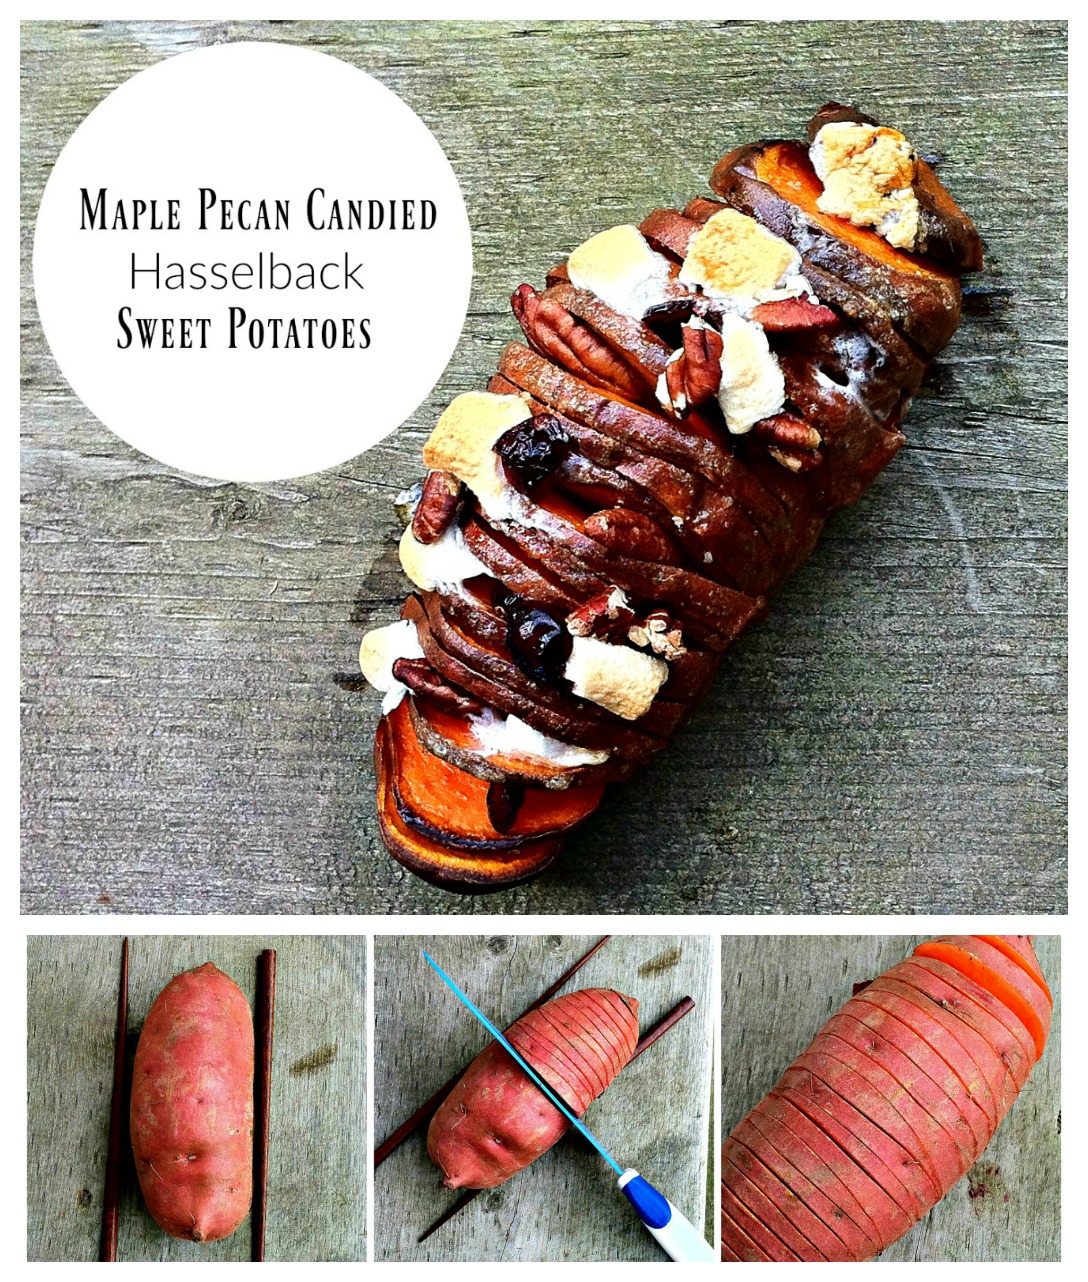 Maple Pecan Candied Hasselback Sweet Potatoes Recipe